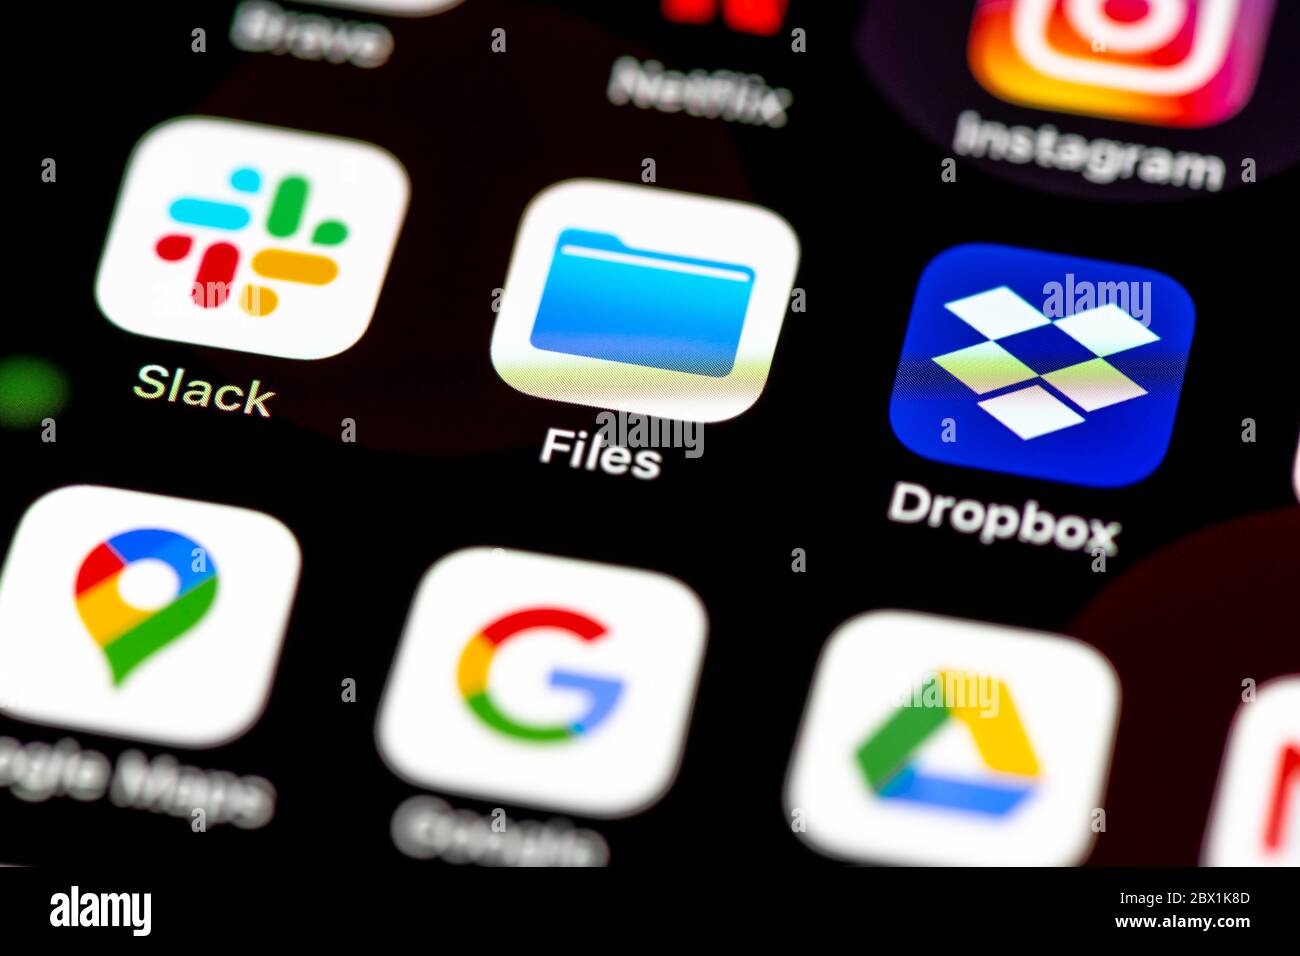 Slack, Apple Files, Dropbox, App Icons su un display mobile, iPhone, smartphone, primo piano Foto Stock